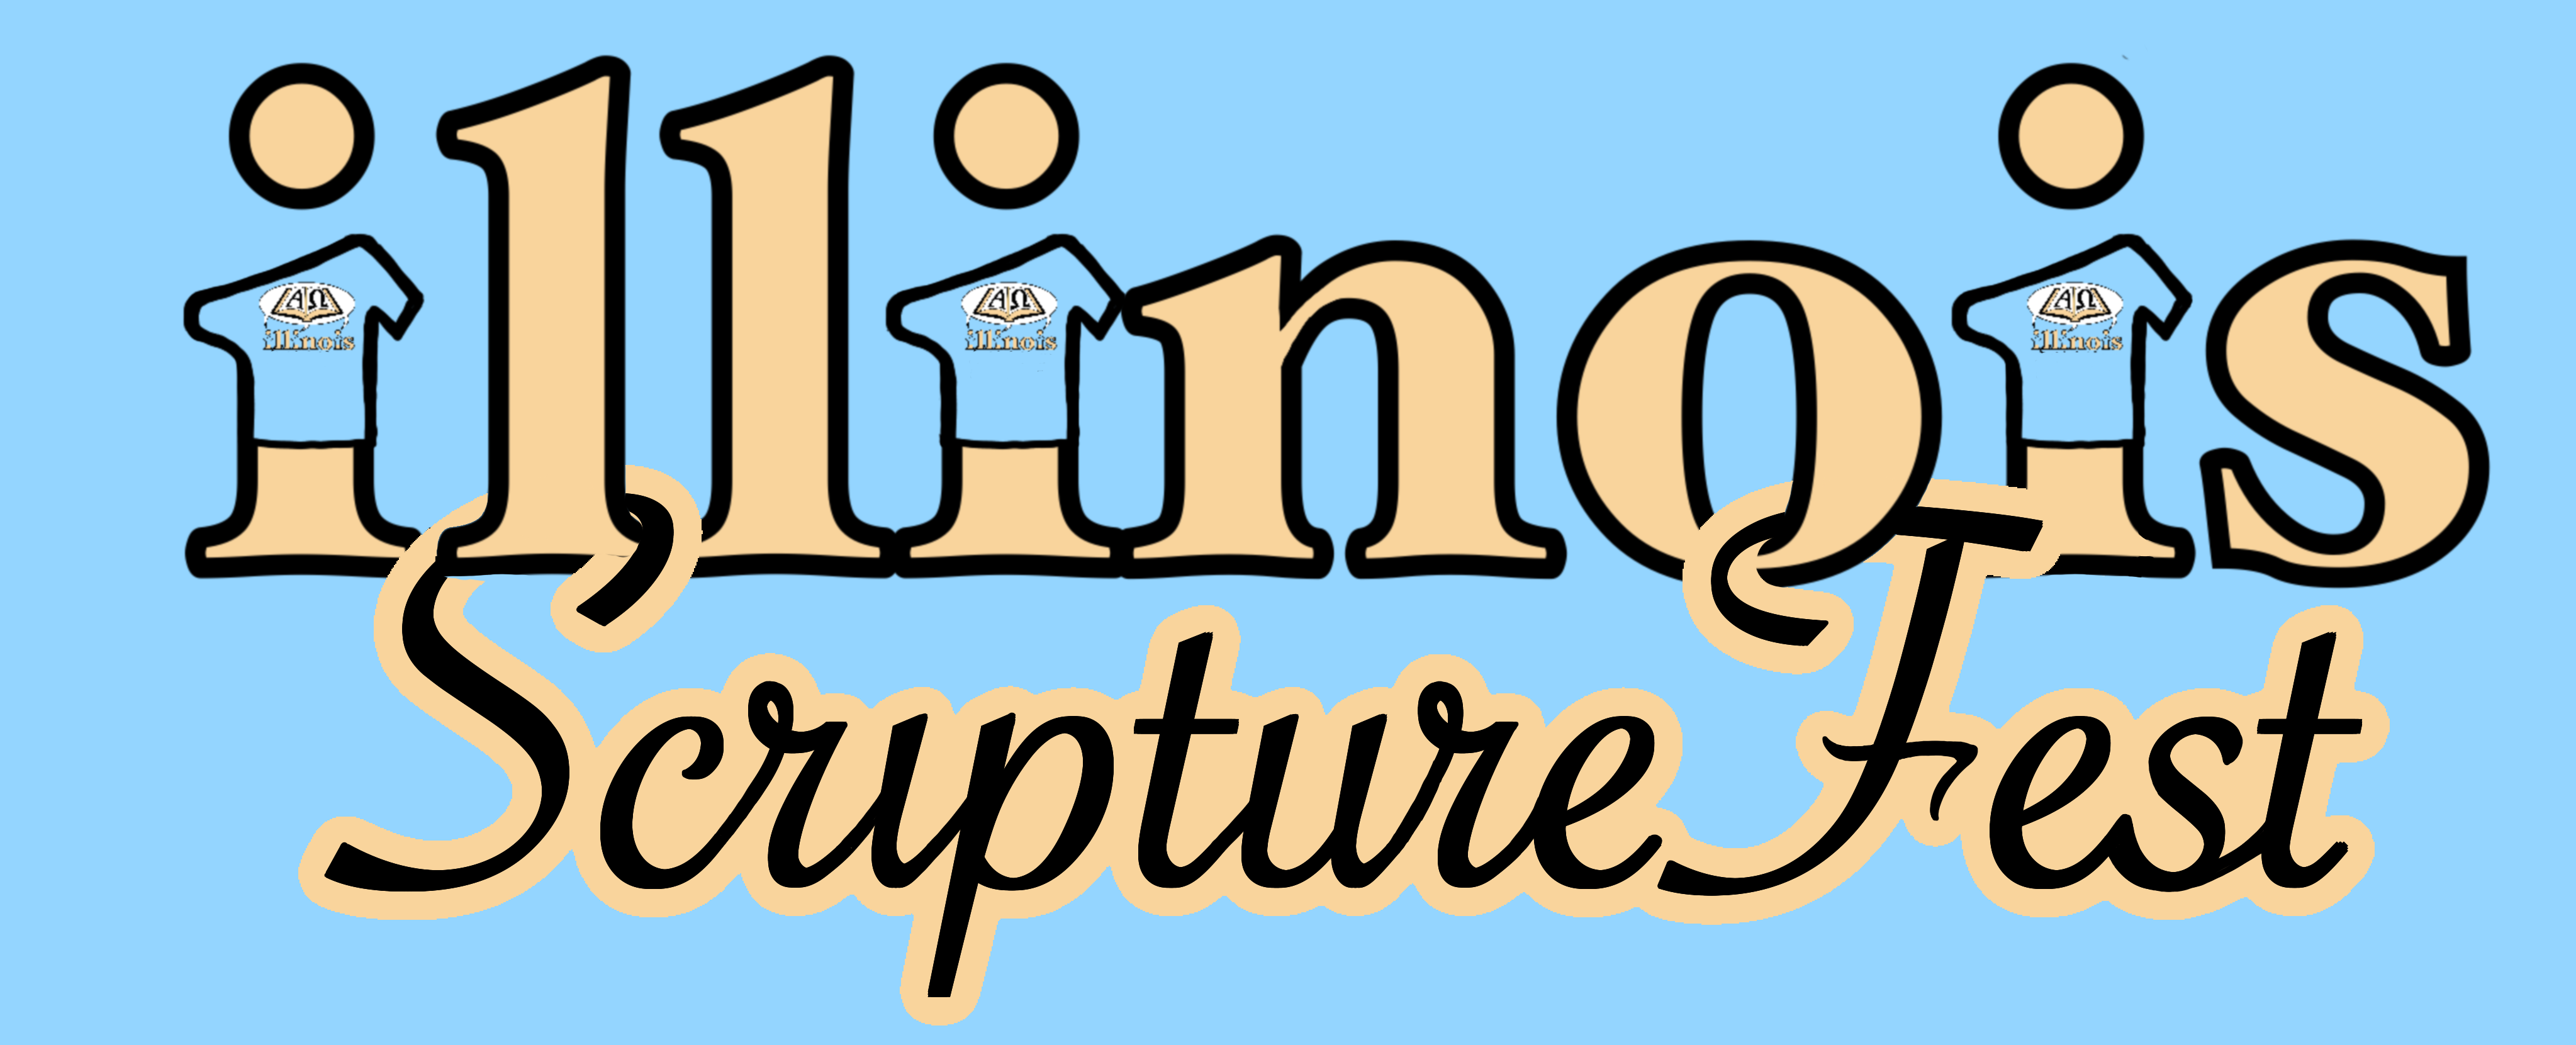 Illinois Scripture Fest Logo